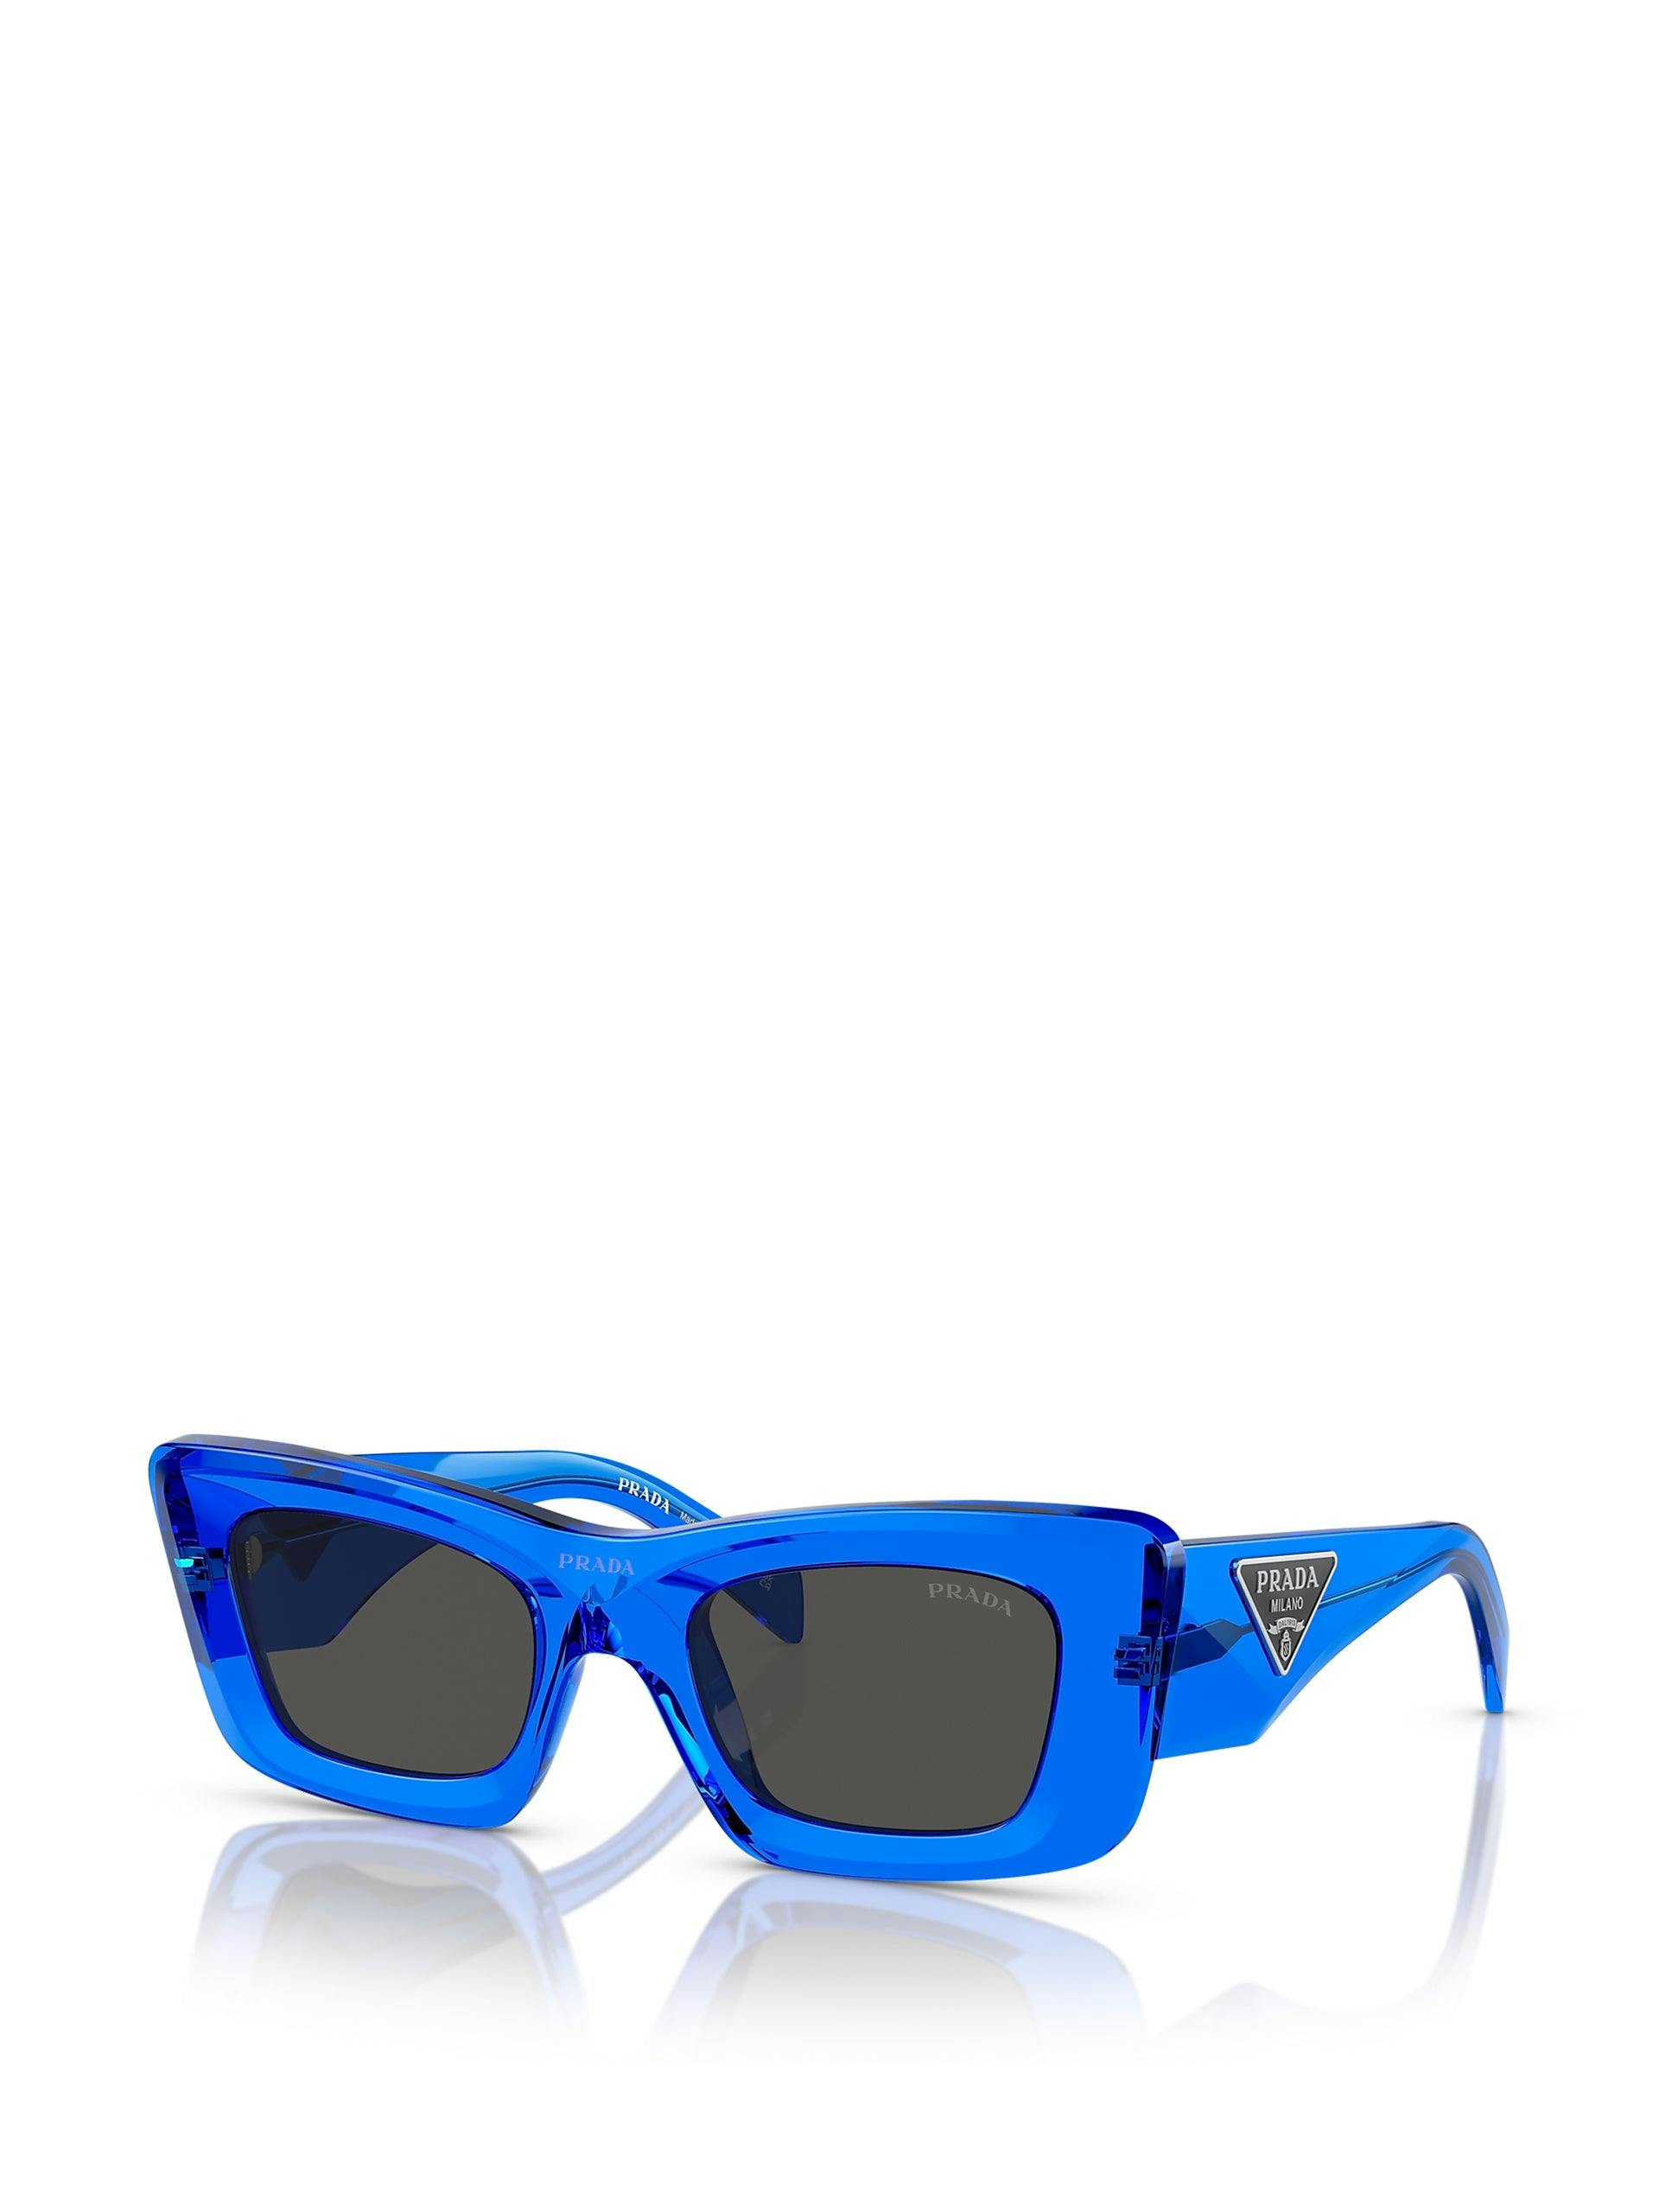 Clear blue sunglasses